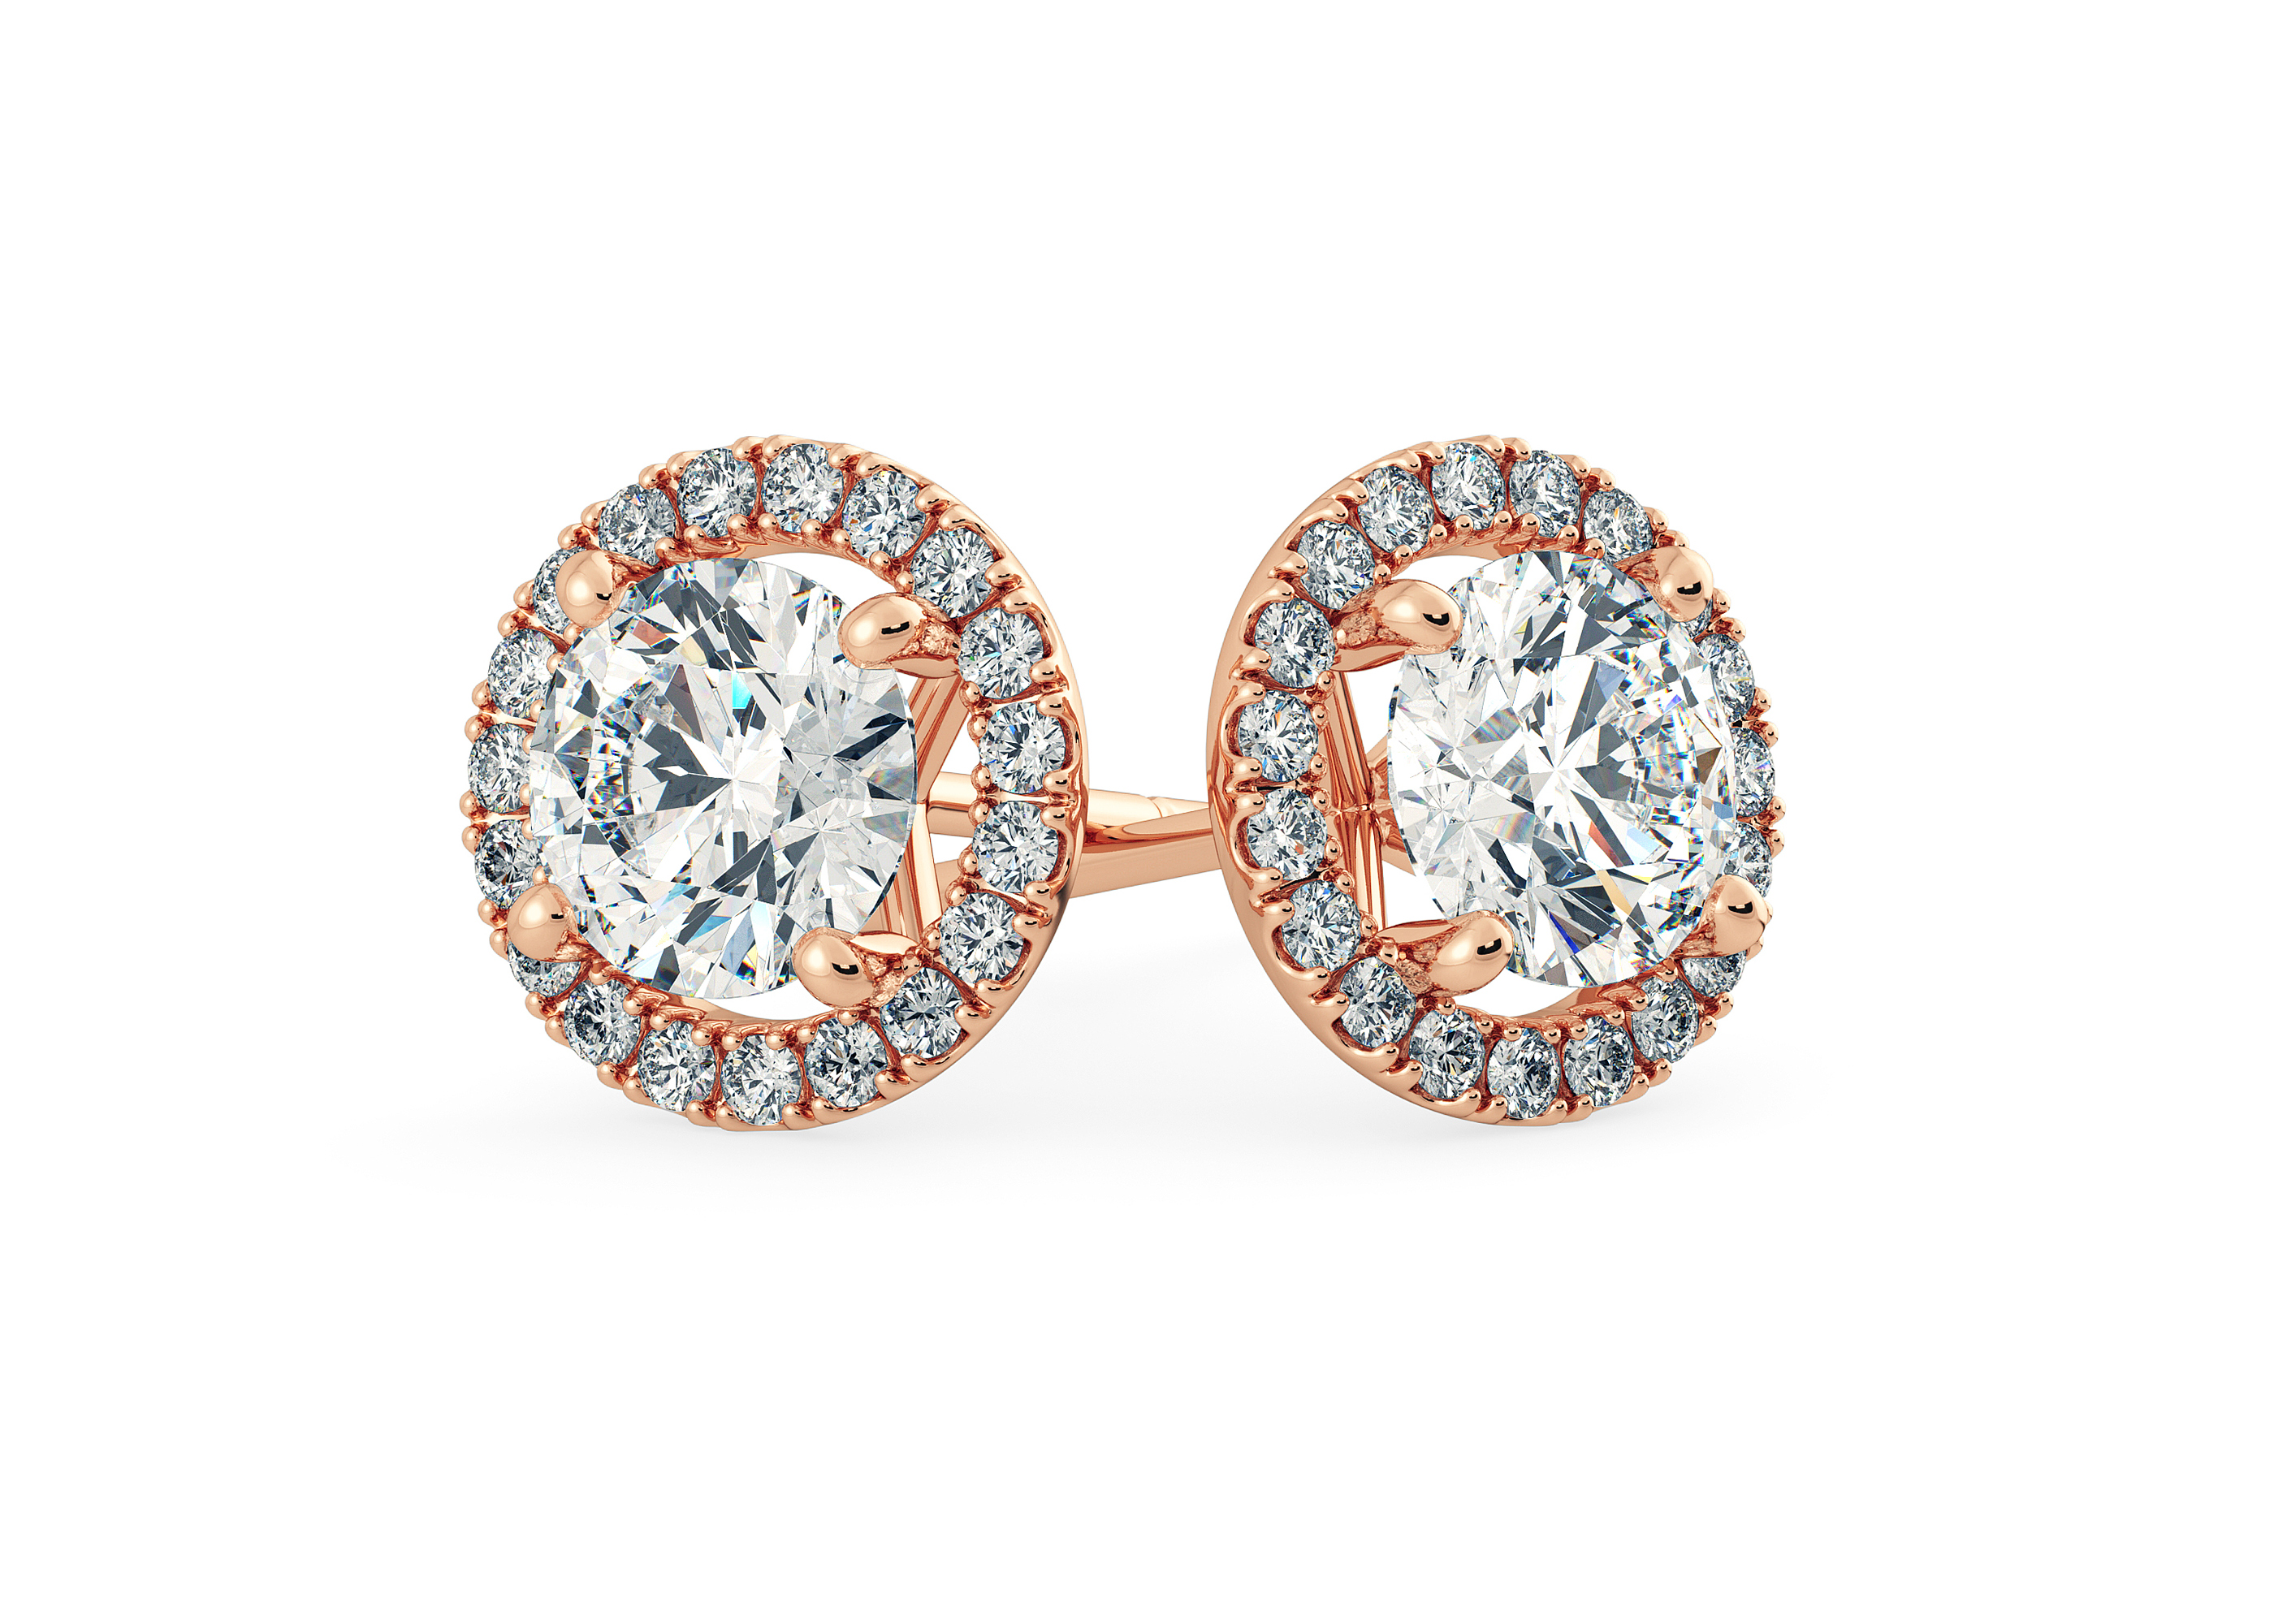 Bijou Round Brilliant Diamond Stud Earrings in 18K Rose Gold with Alpha Backs